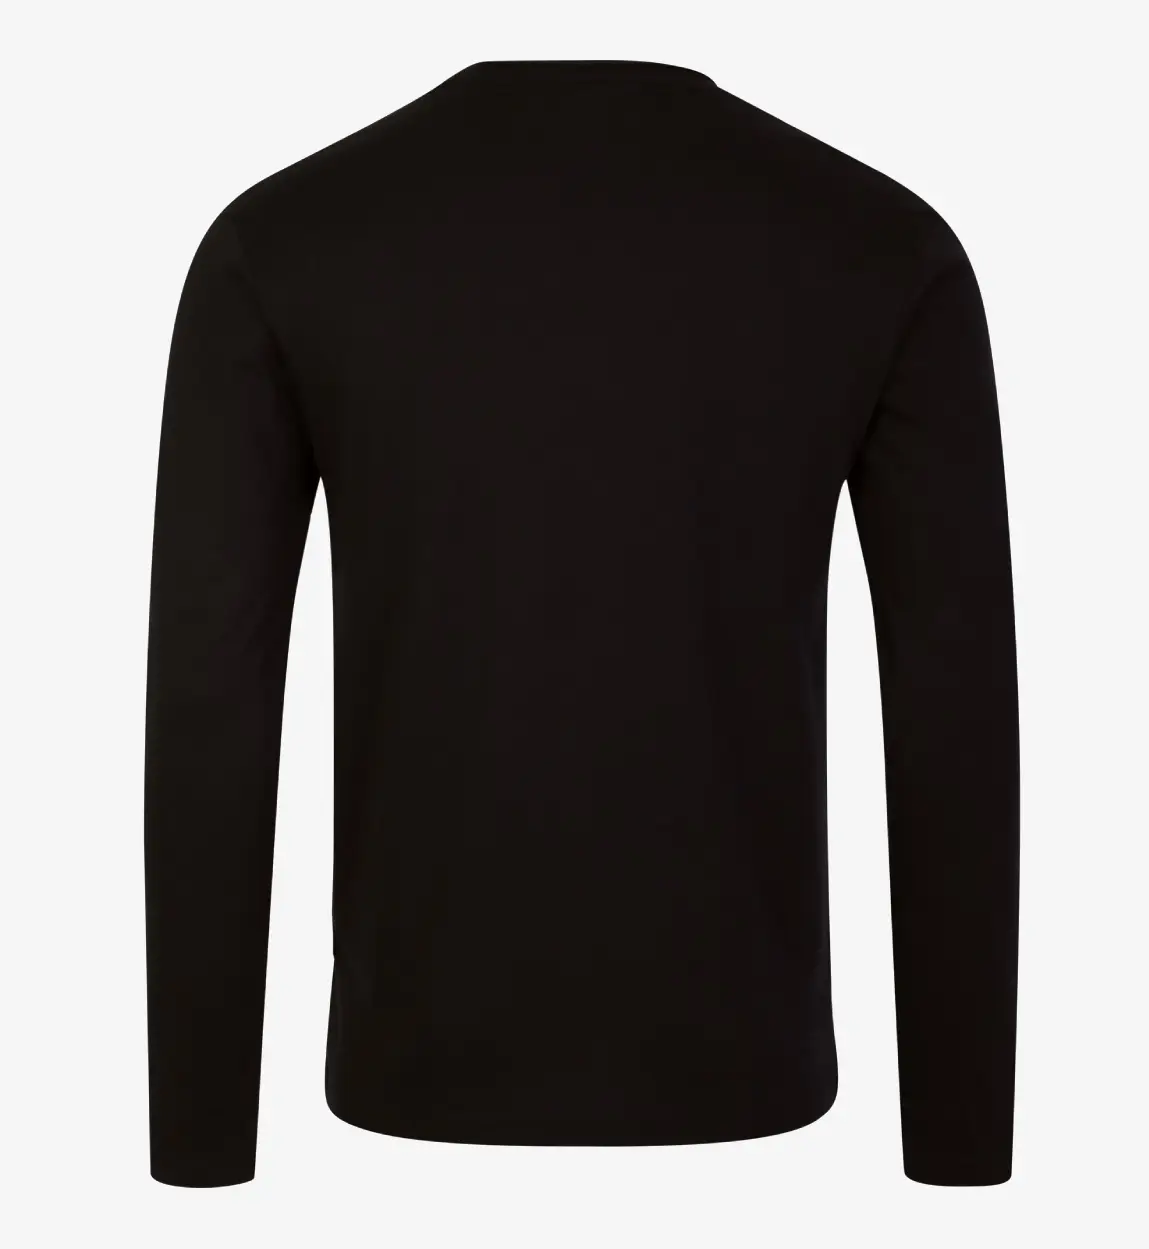 Tendon Printed Full Sleeves T-Shirt (2)